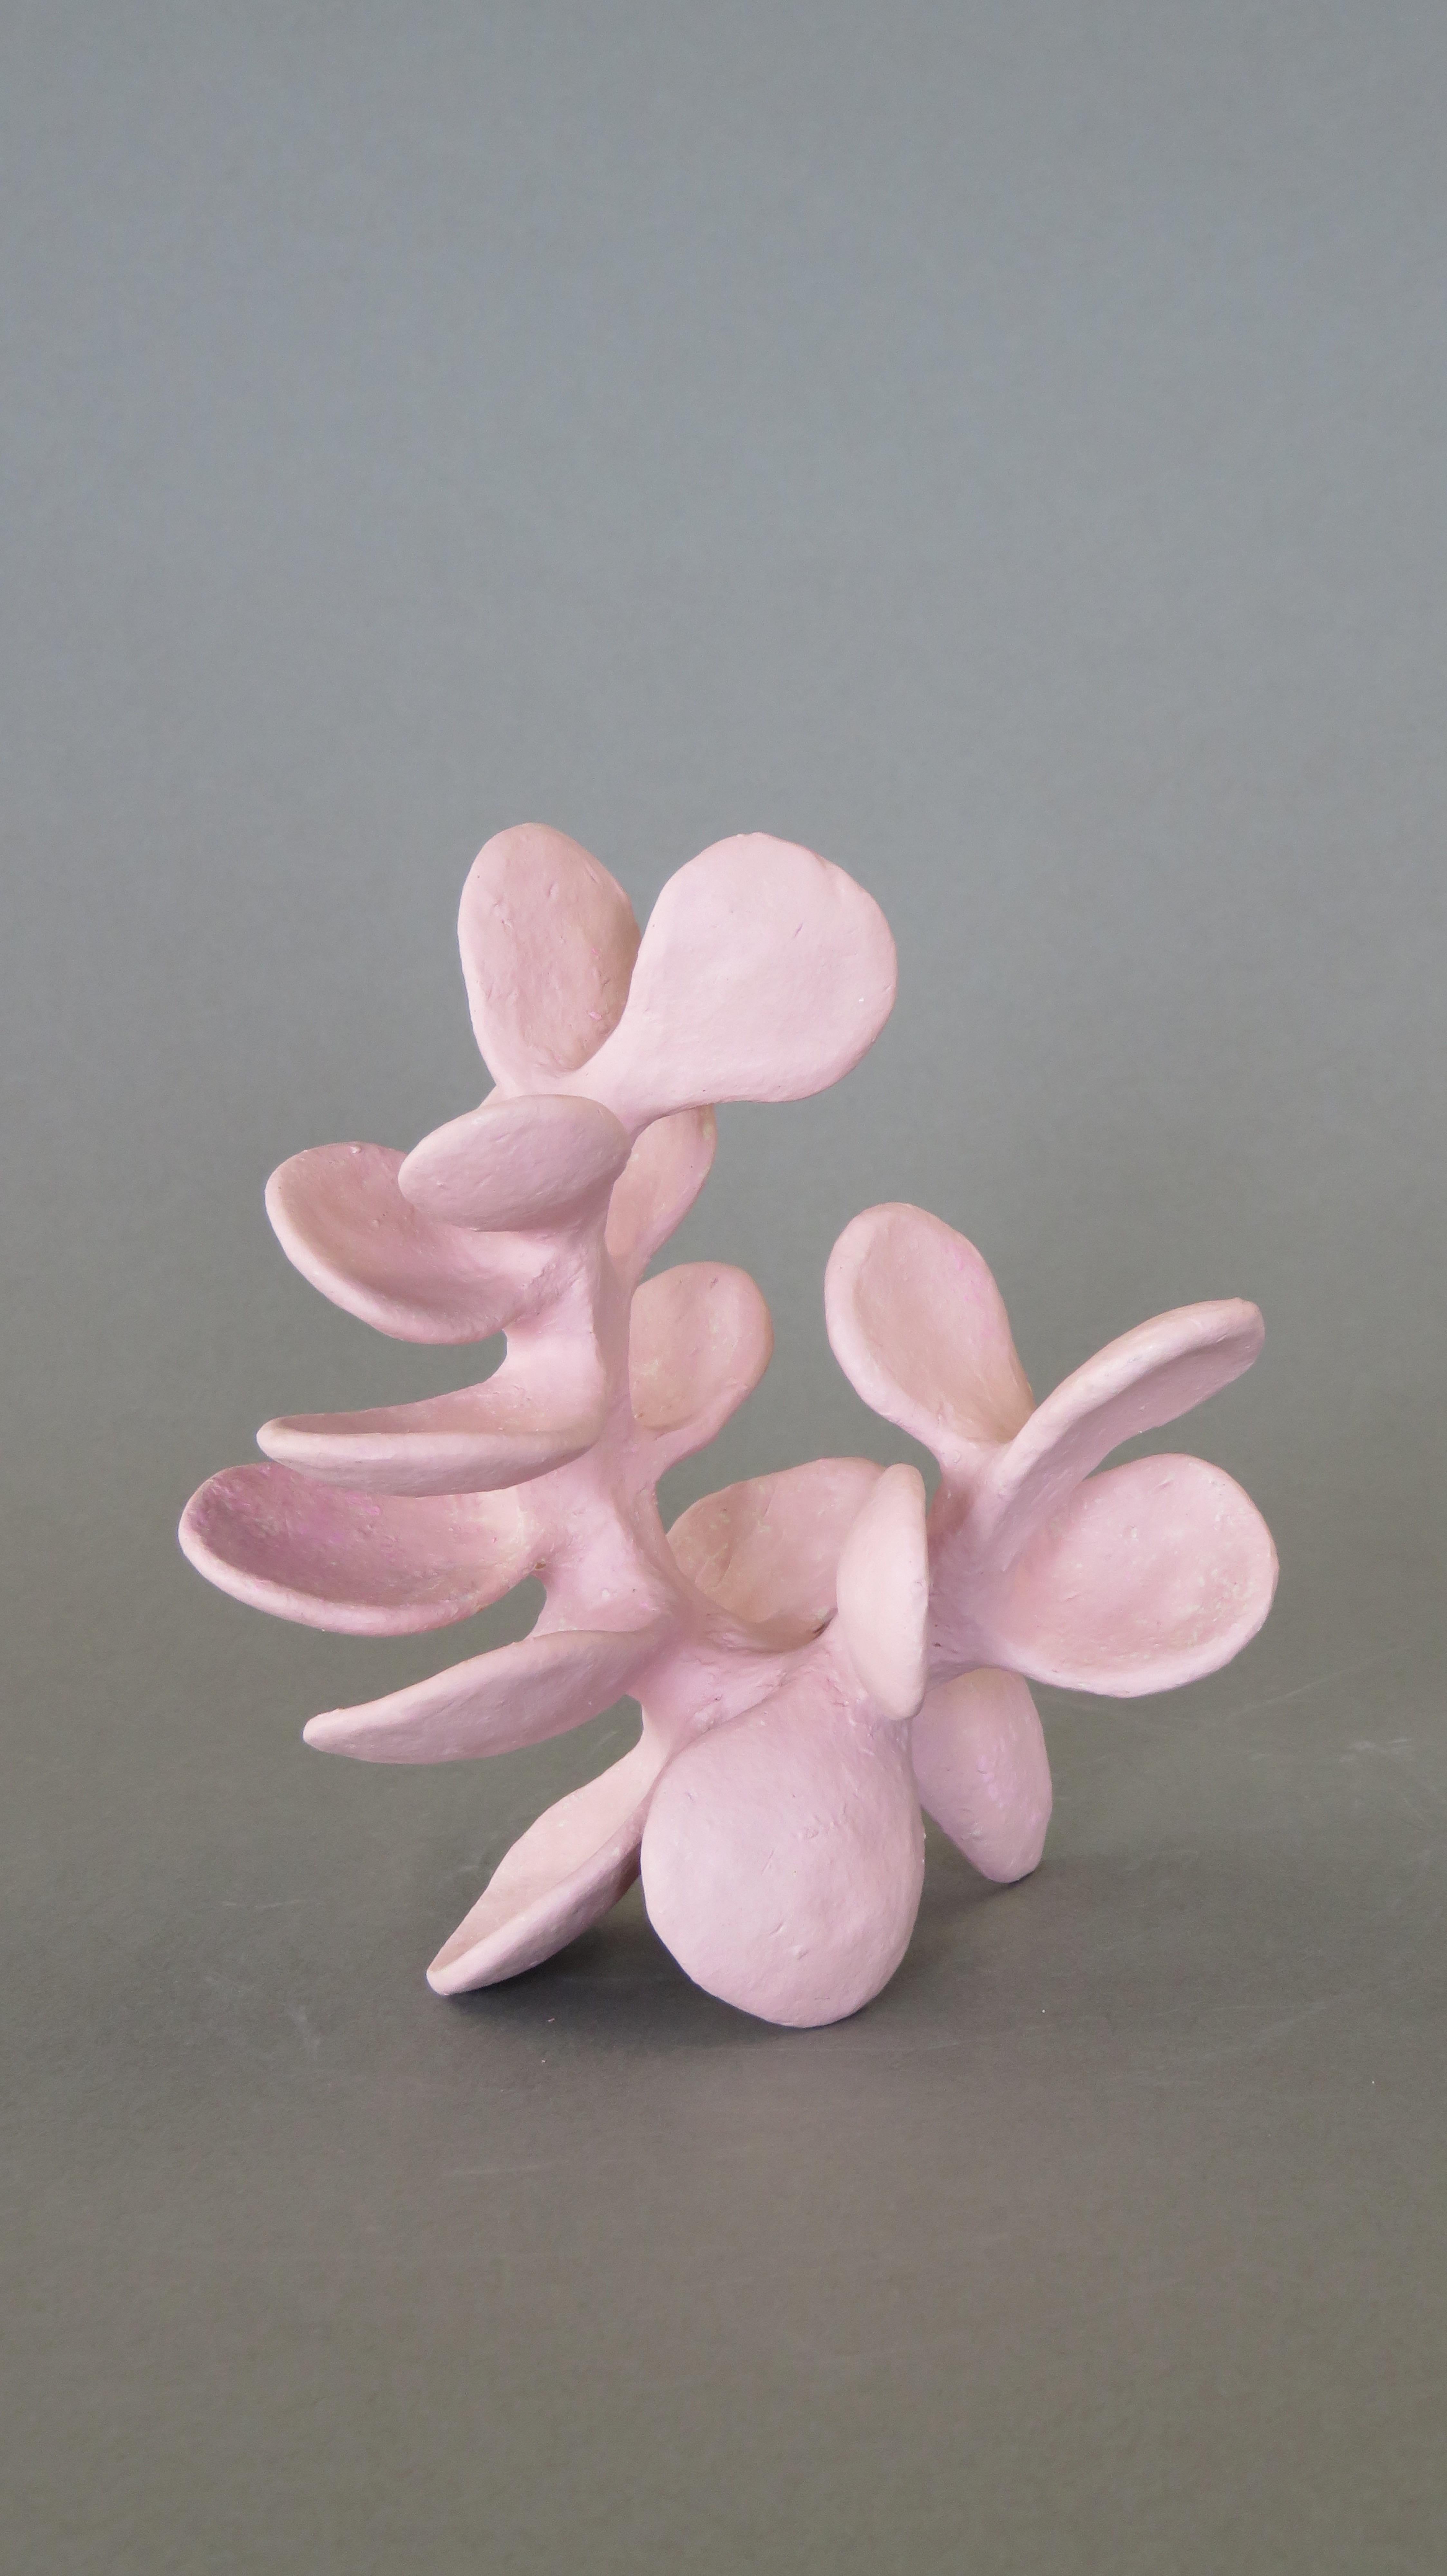 Contemporary Handbuilt Ceramic Sculpture in Pink, A Flower-Like Vertebrae With Petals